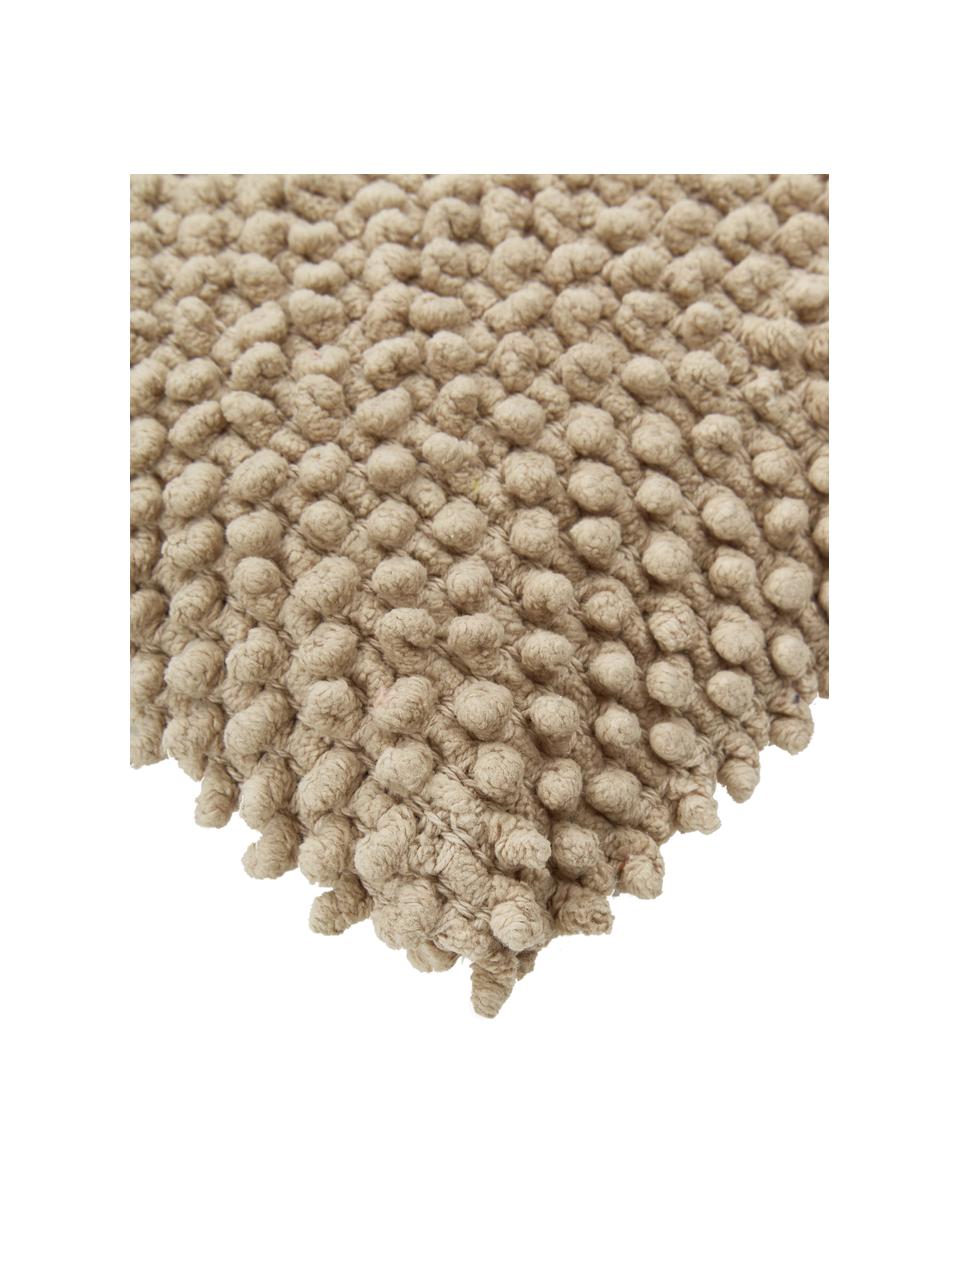 Poszewka na poduszkę Indi, 100% bawełna, Taupe, S 30 x D 50 cm